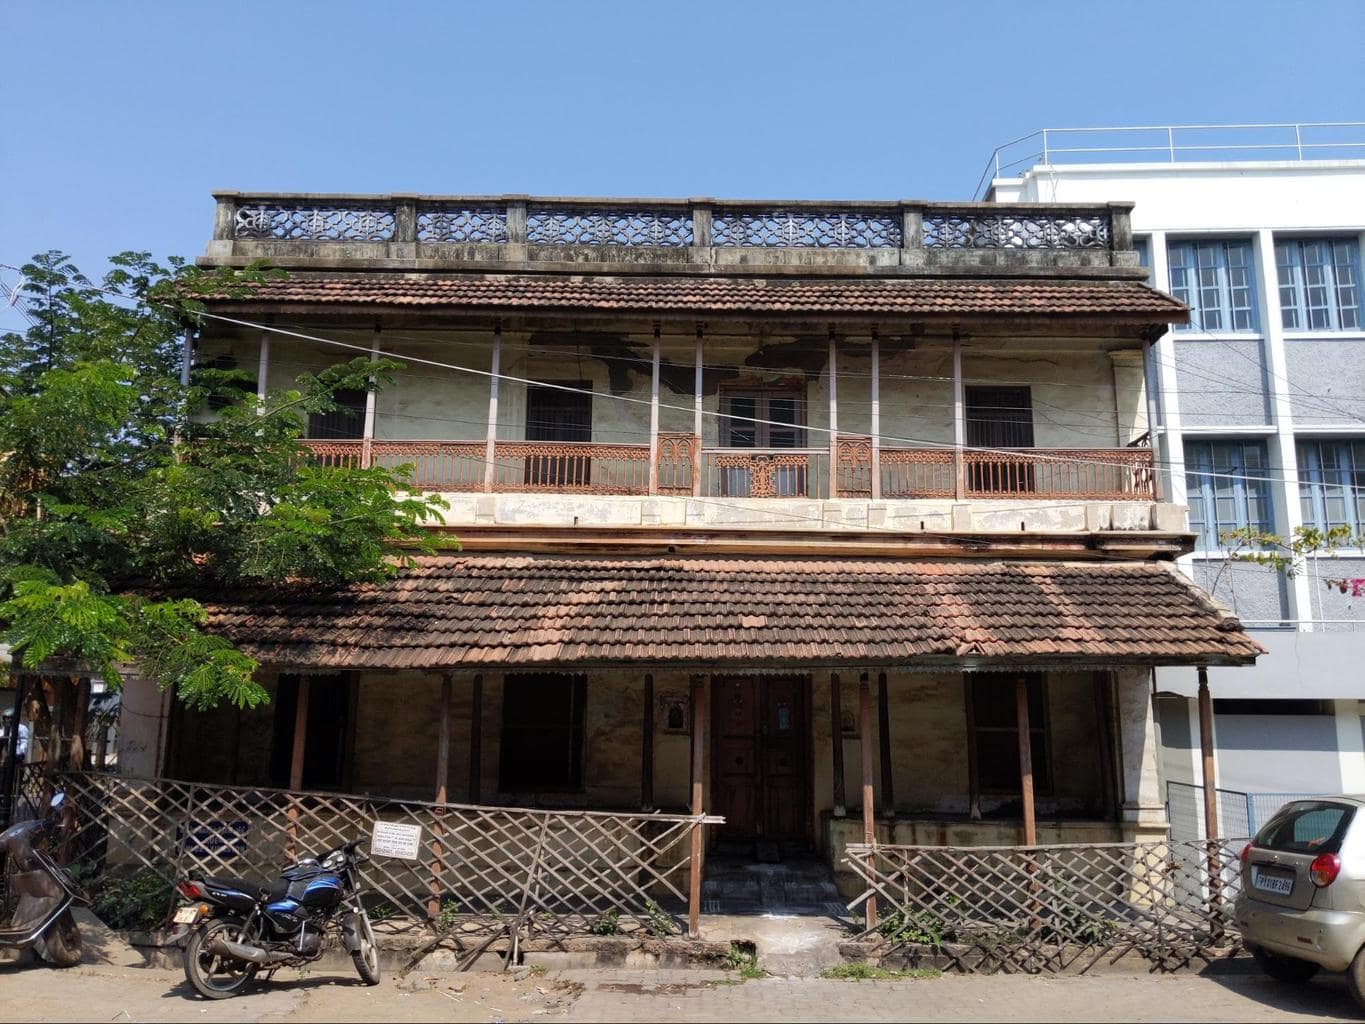 Typical Tamil Quarter architecture